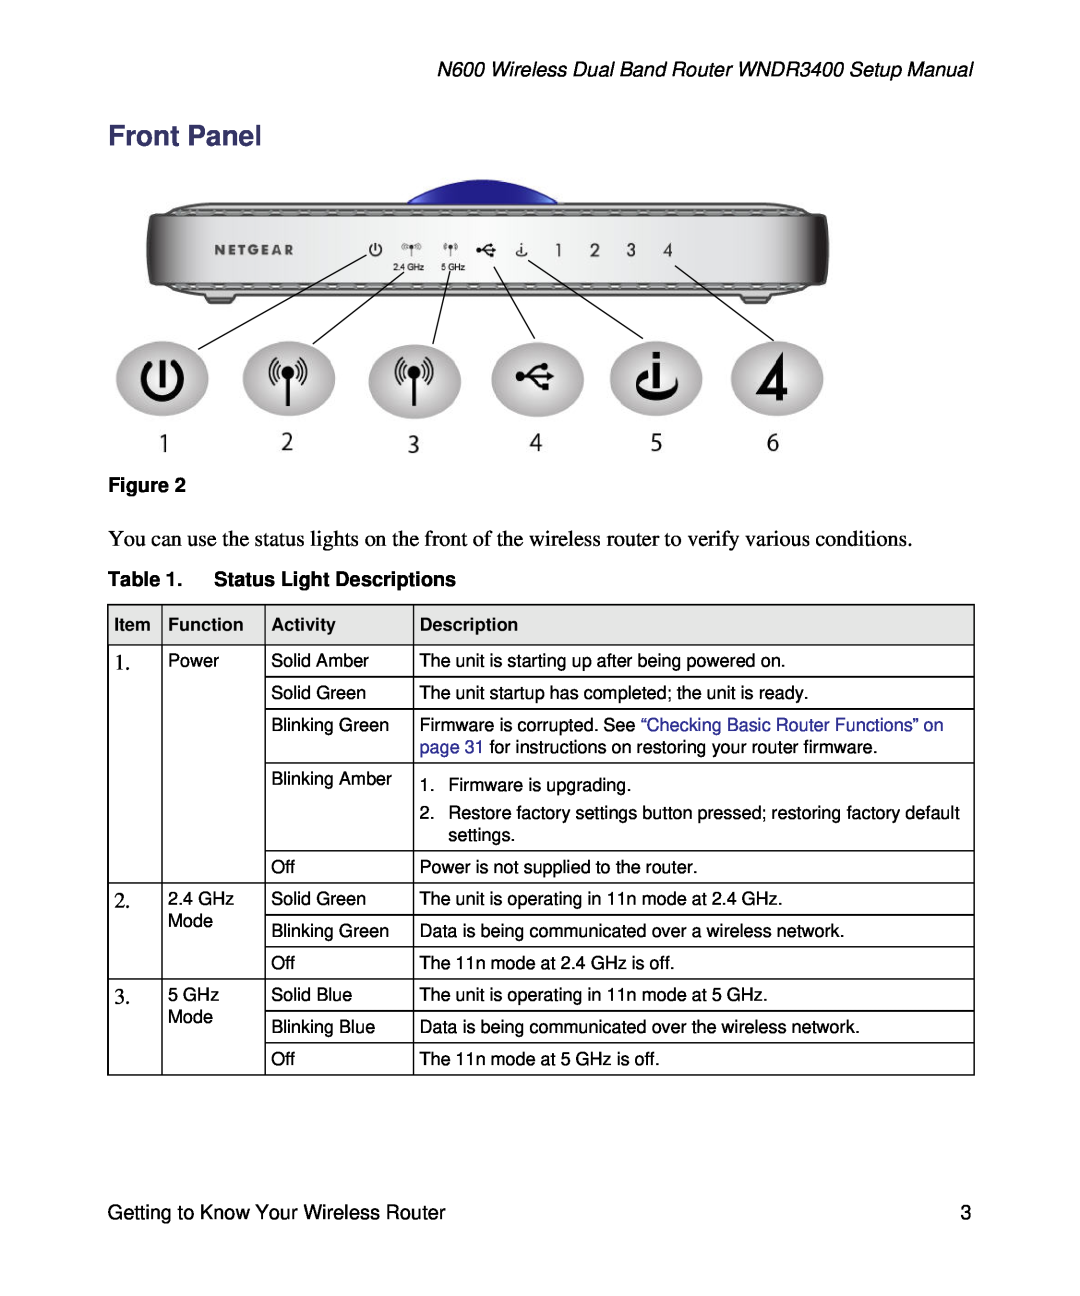 NETGEAR WNDR3400-100NAS manual Front Panel, N600 Wireless Dual Band Router WNDR3400 Setup Manual, Status Light Descriptions 